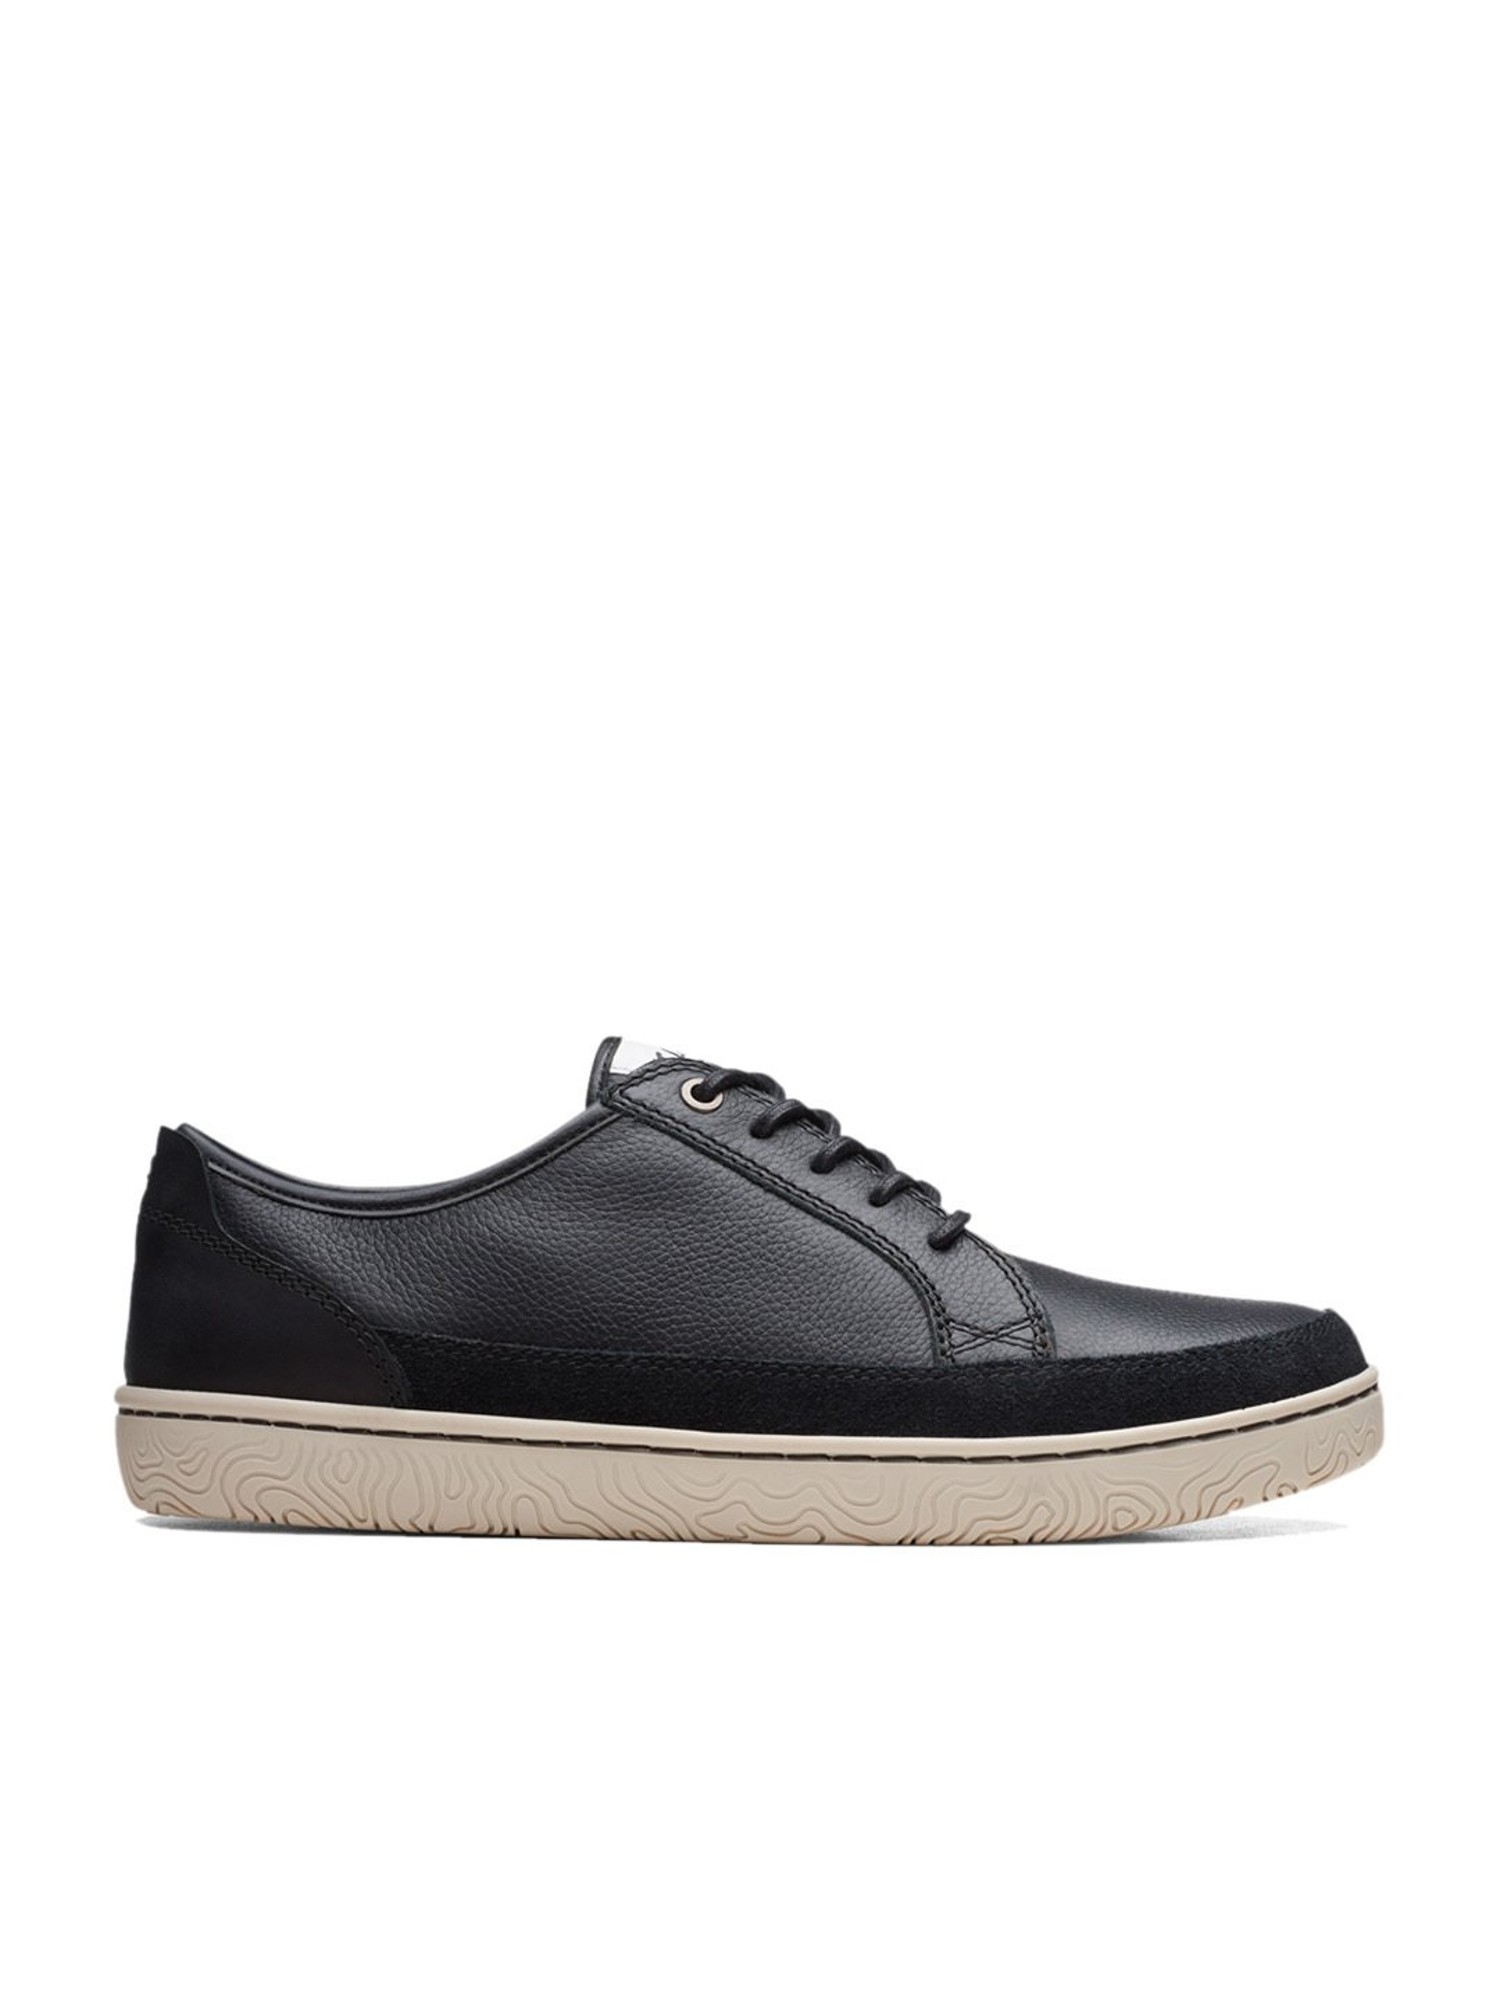 Buy Black Casual Shoes for Men by Cs/lp Online | Ajio.com